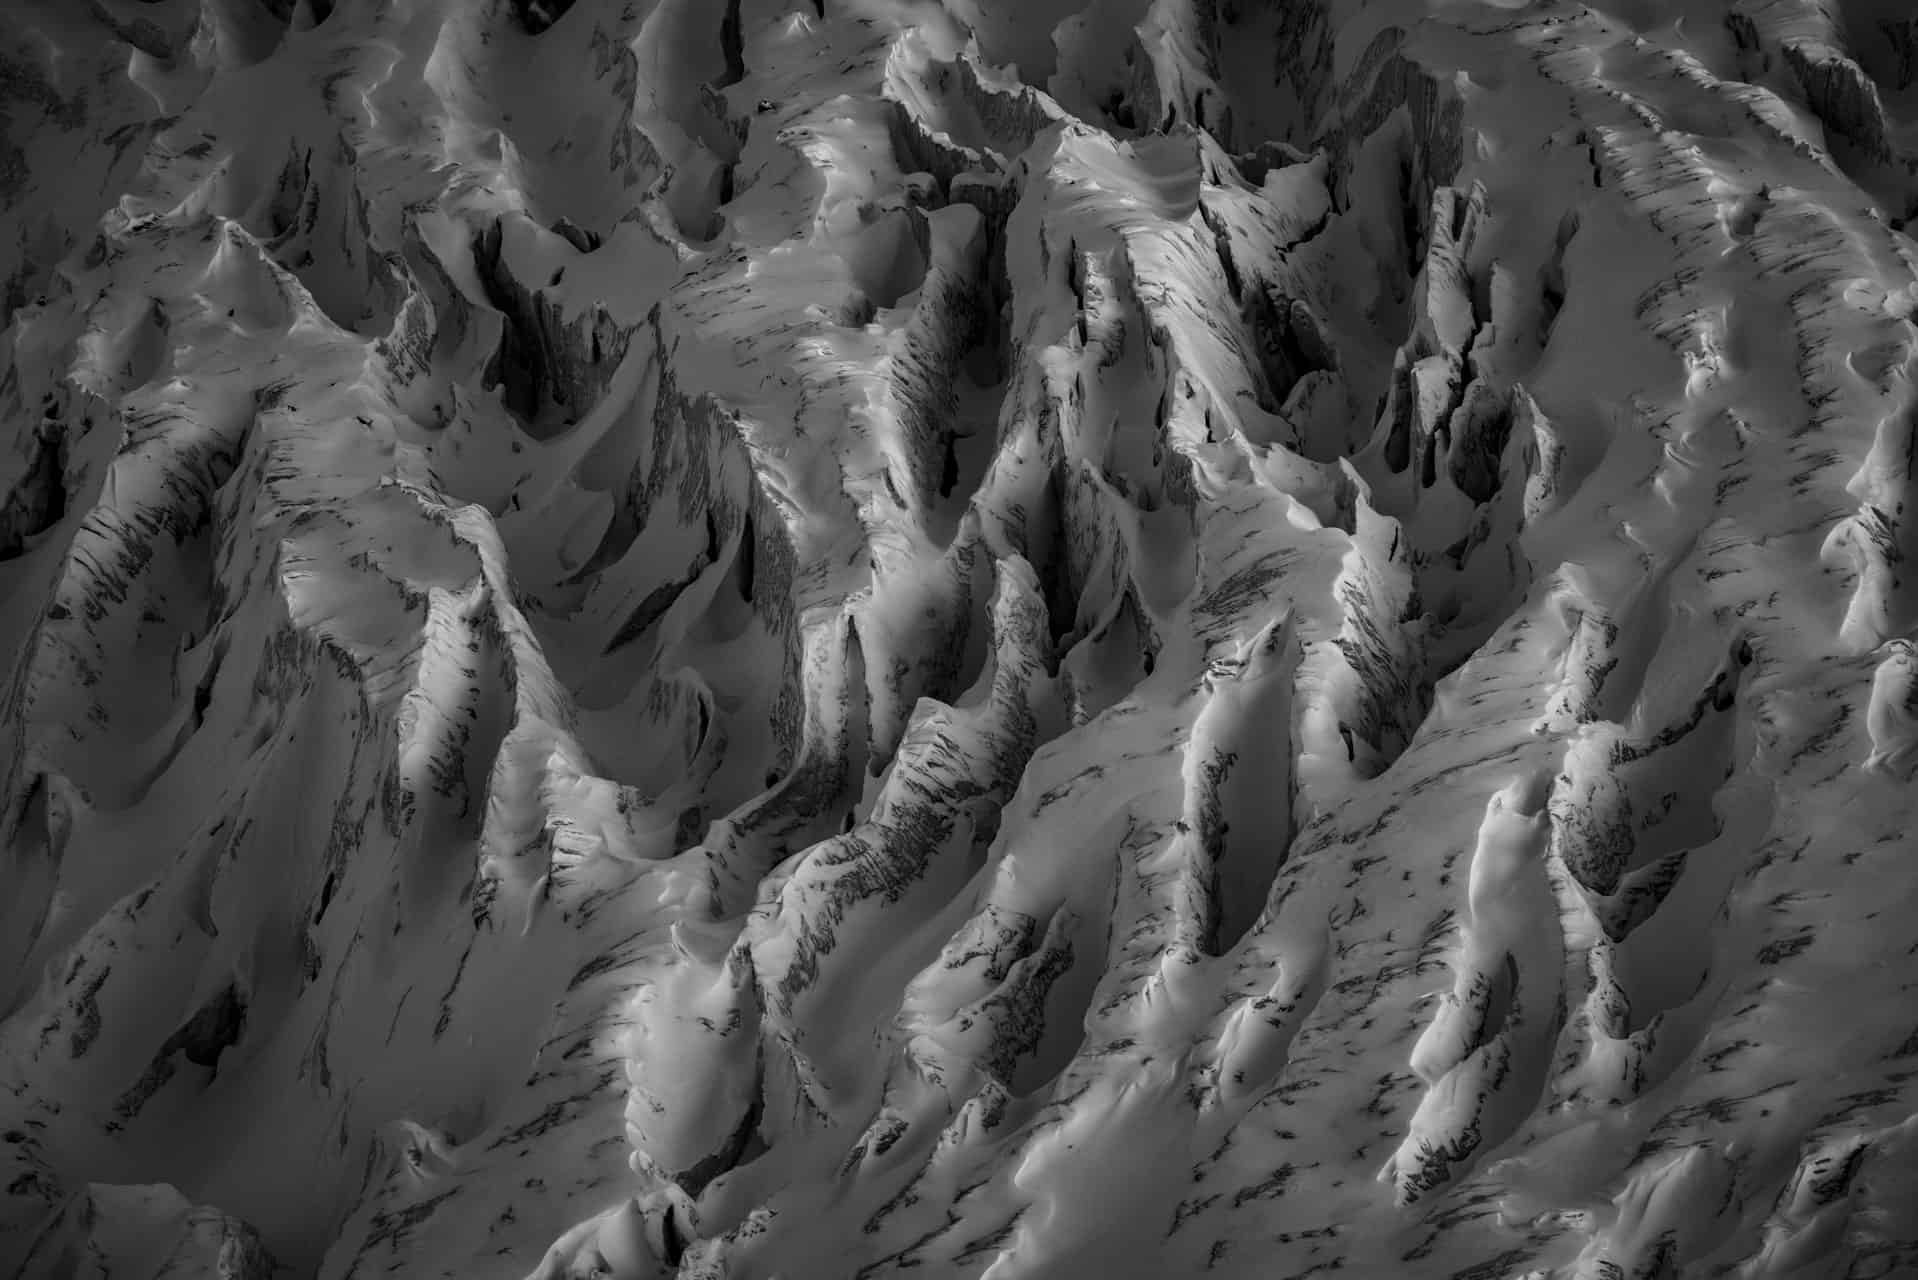 photography of alpine glaciers - abstract crevasses